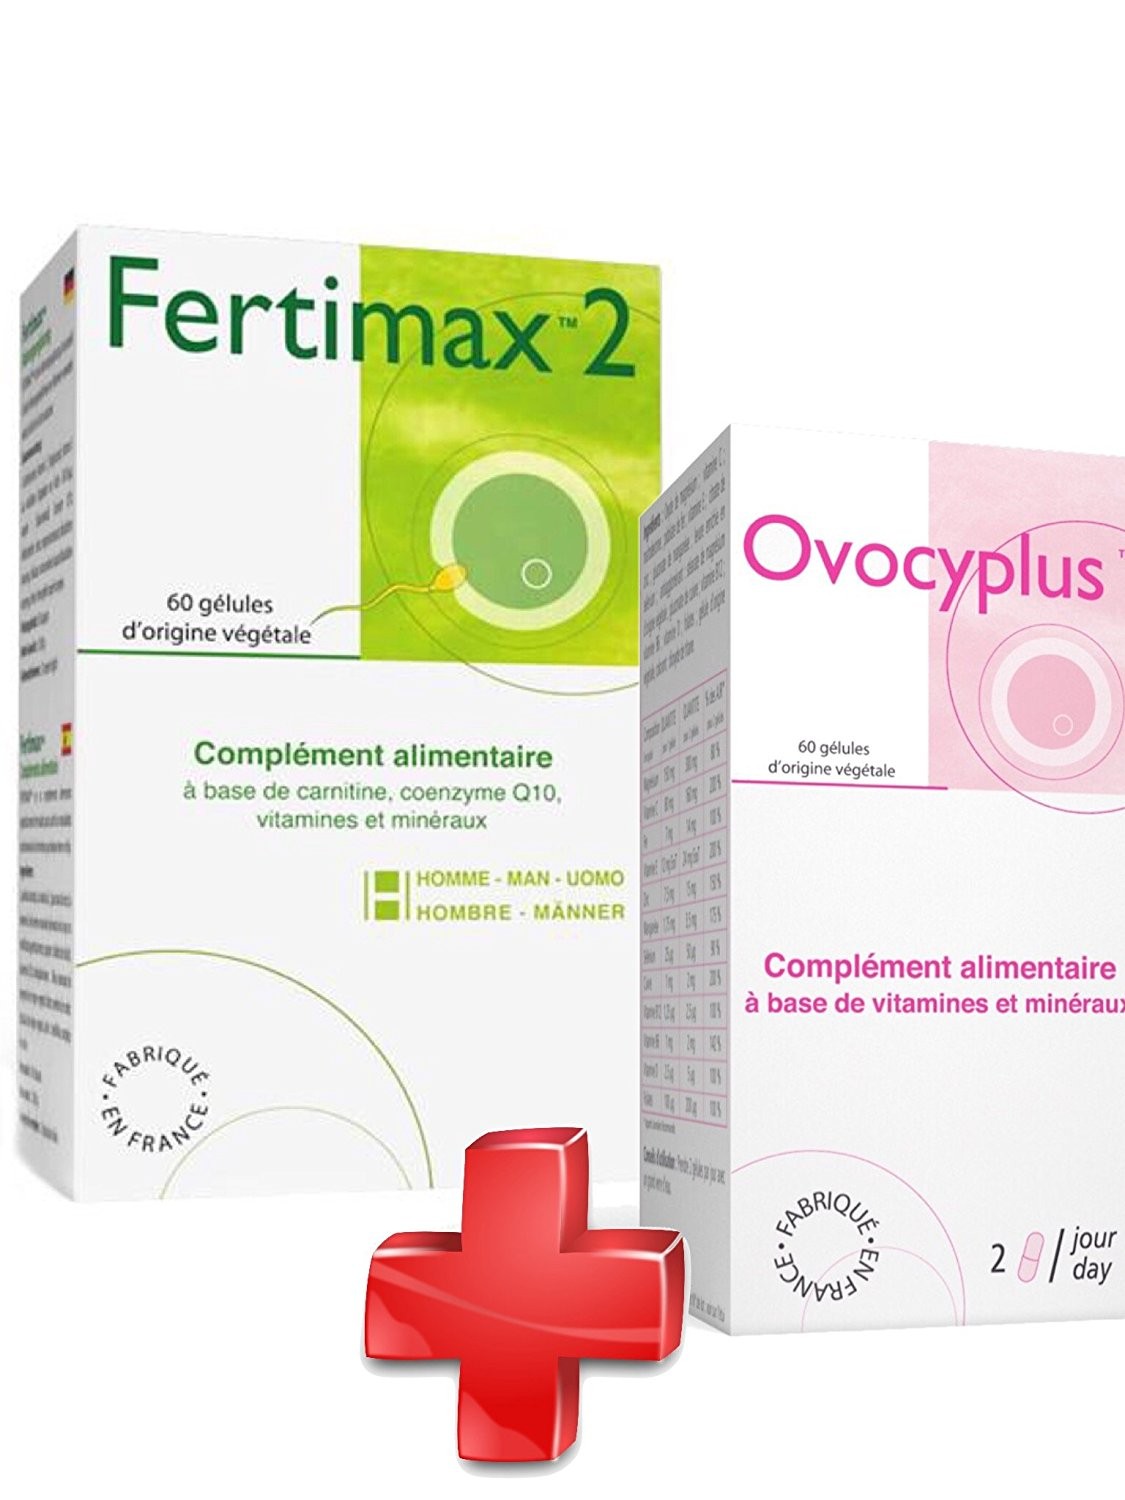 Fertimax 2 + Ovocyplus – Fertilité masculine et féminine